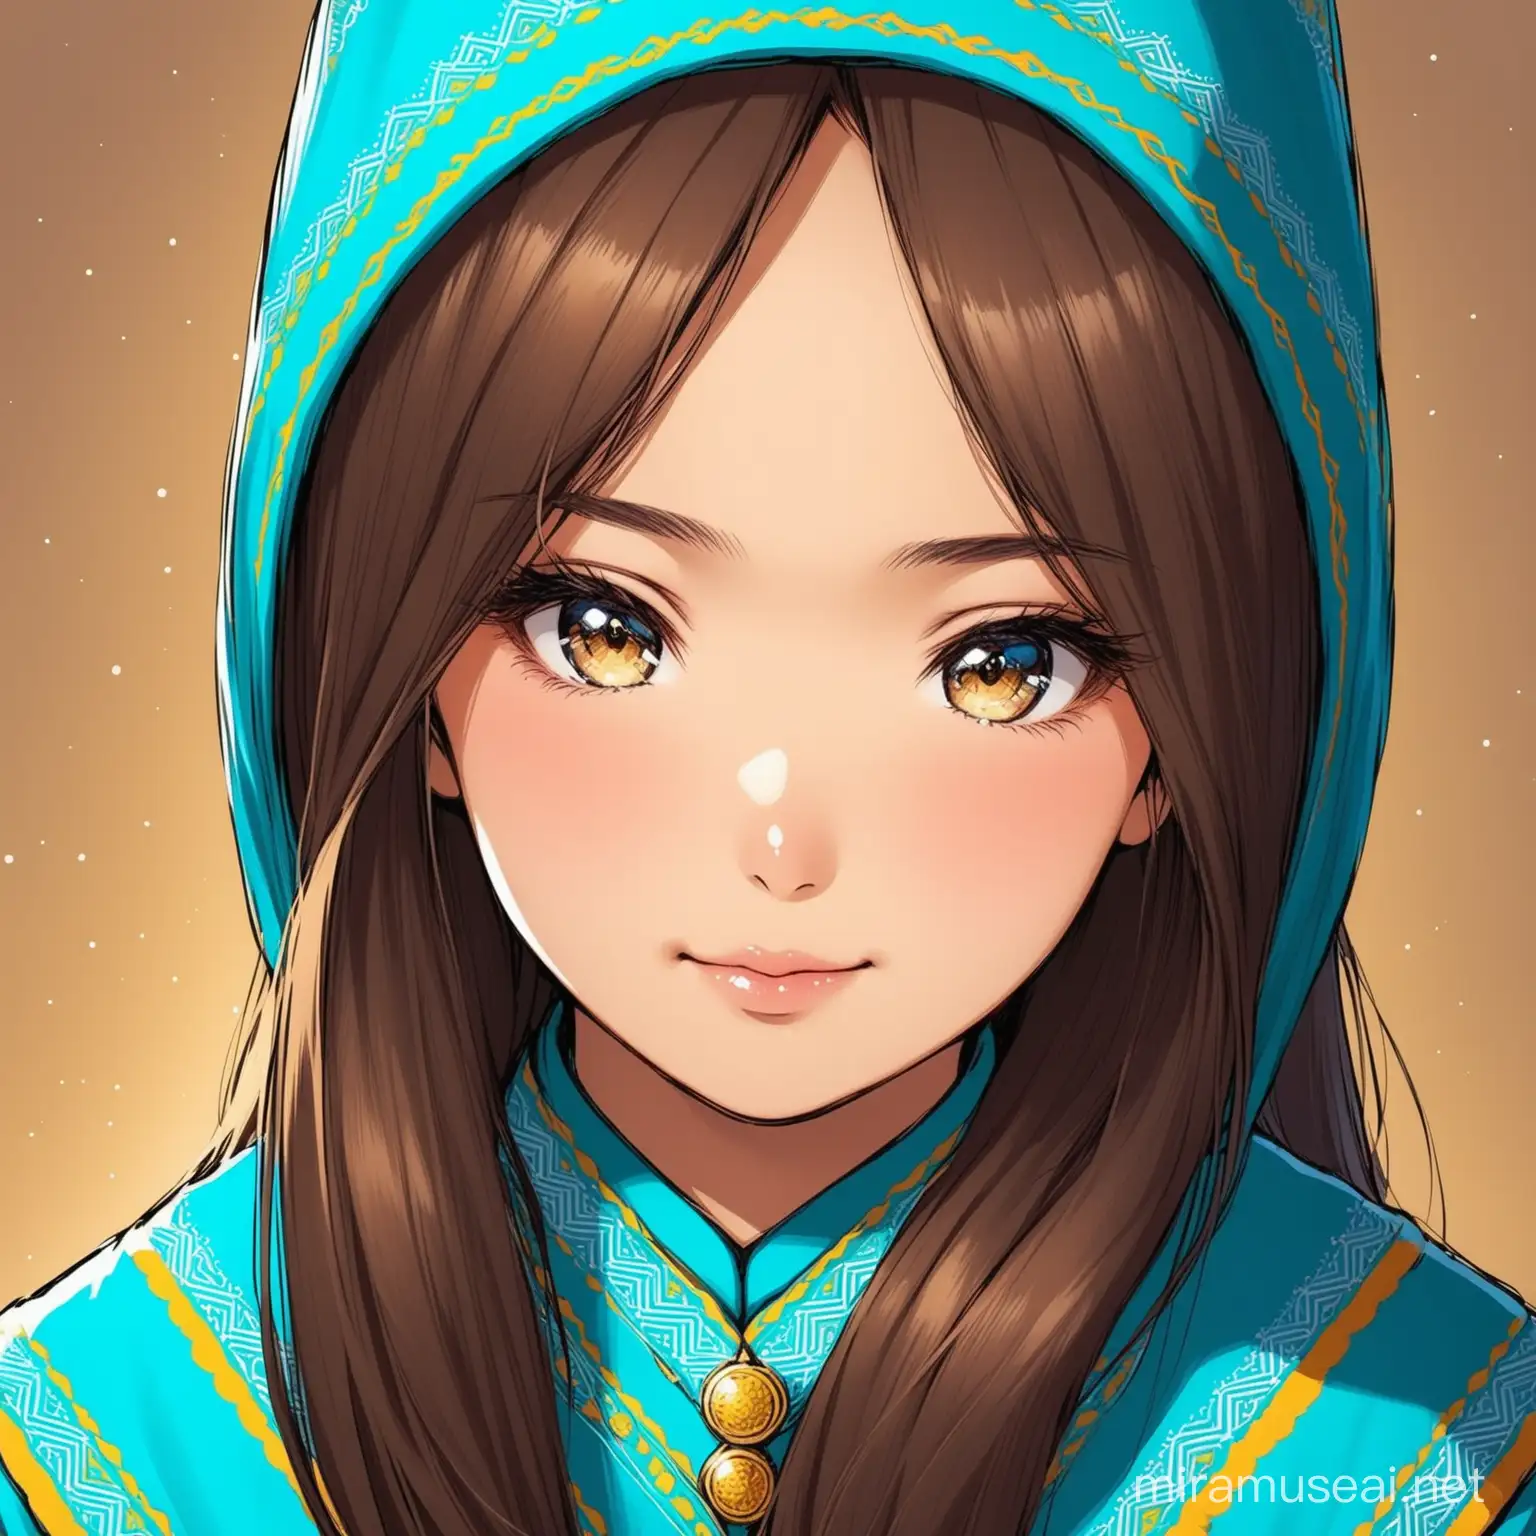 Traditional Kazakh Girl in Ethnic Attire